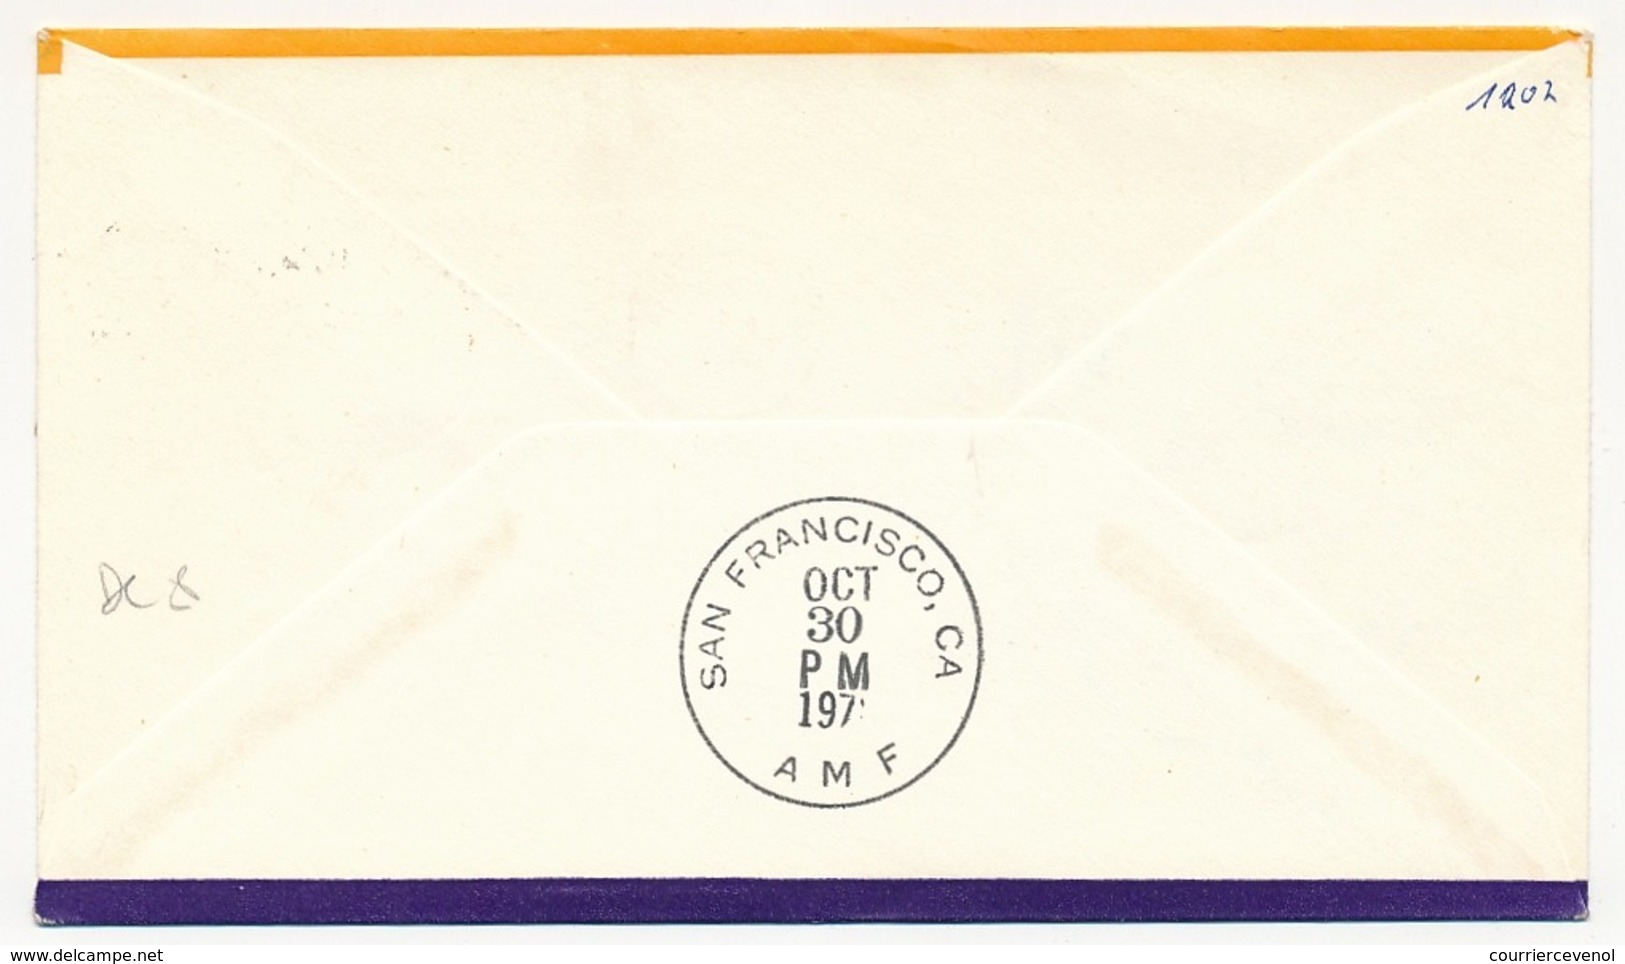 ETATS UNIS - SERBORRO WORLD AIRLINES - Vol Inaugural New Yorl => San Francisco - US Postal Service - 30 Oct 1978 - 3c. 1961-... Briefe U. Dokumente